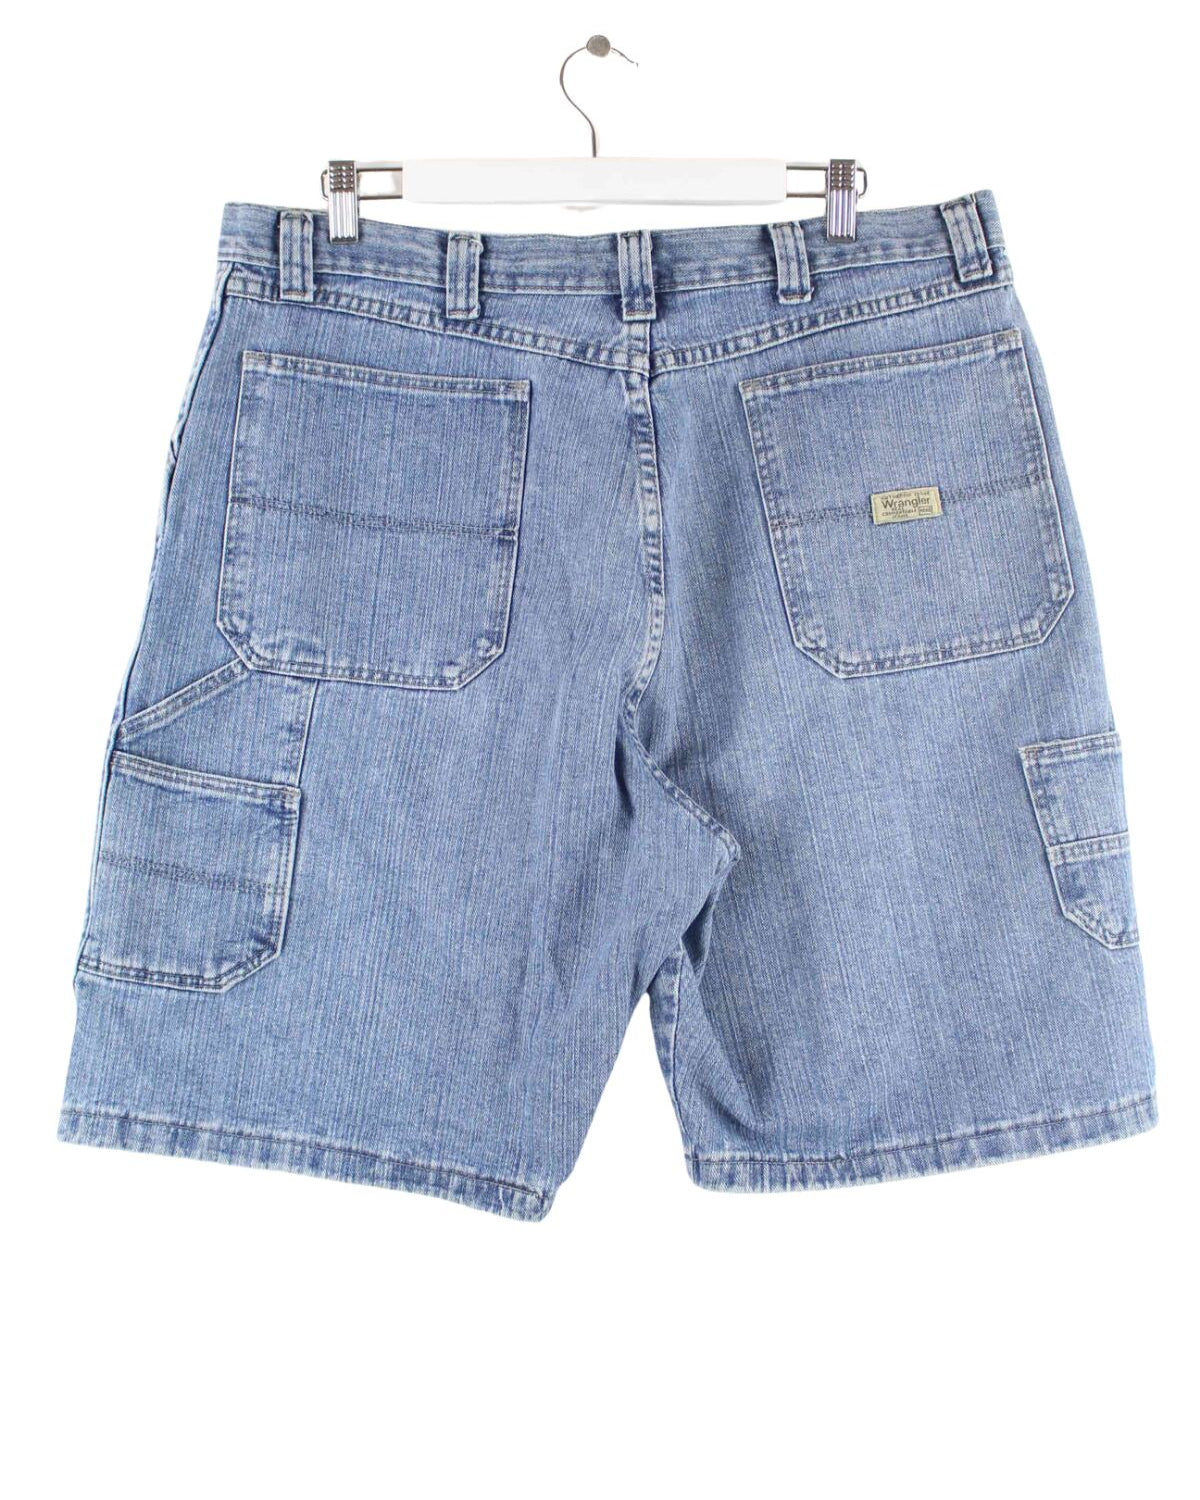 Wrangler y2k Carpenter Jorts / Jeans Shorts Blau W38 (back image)